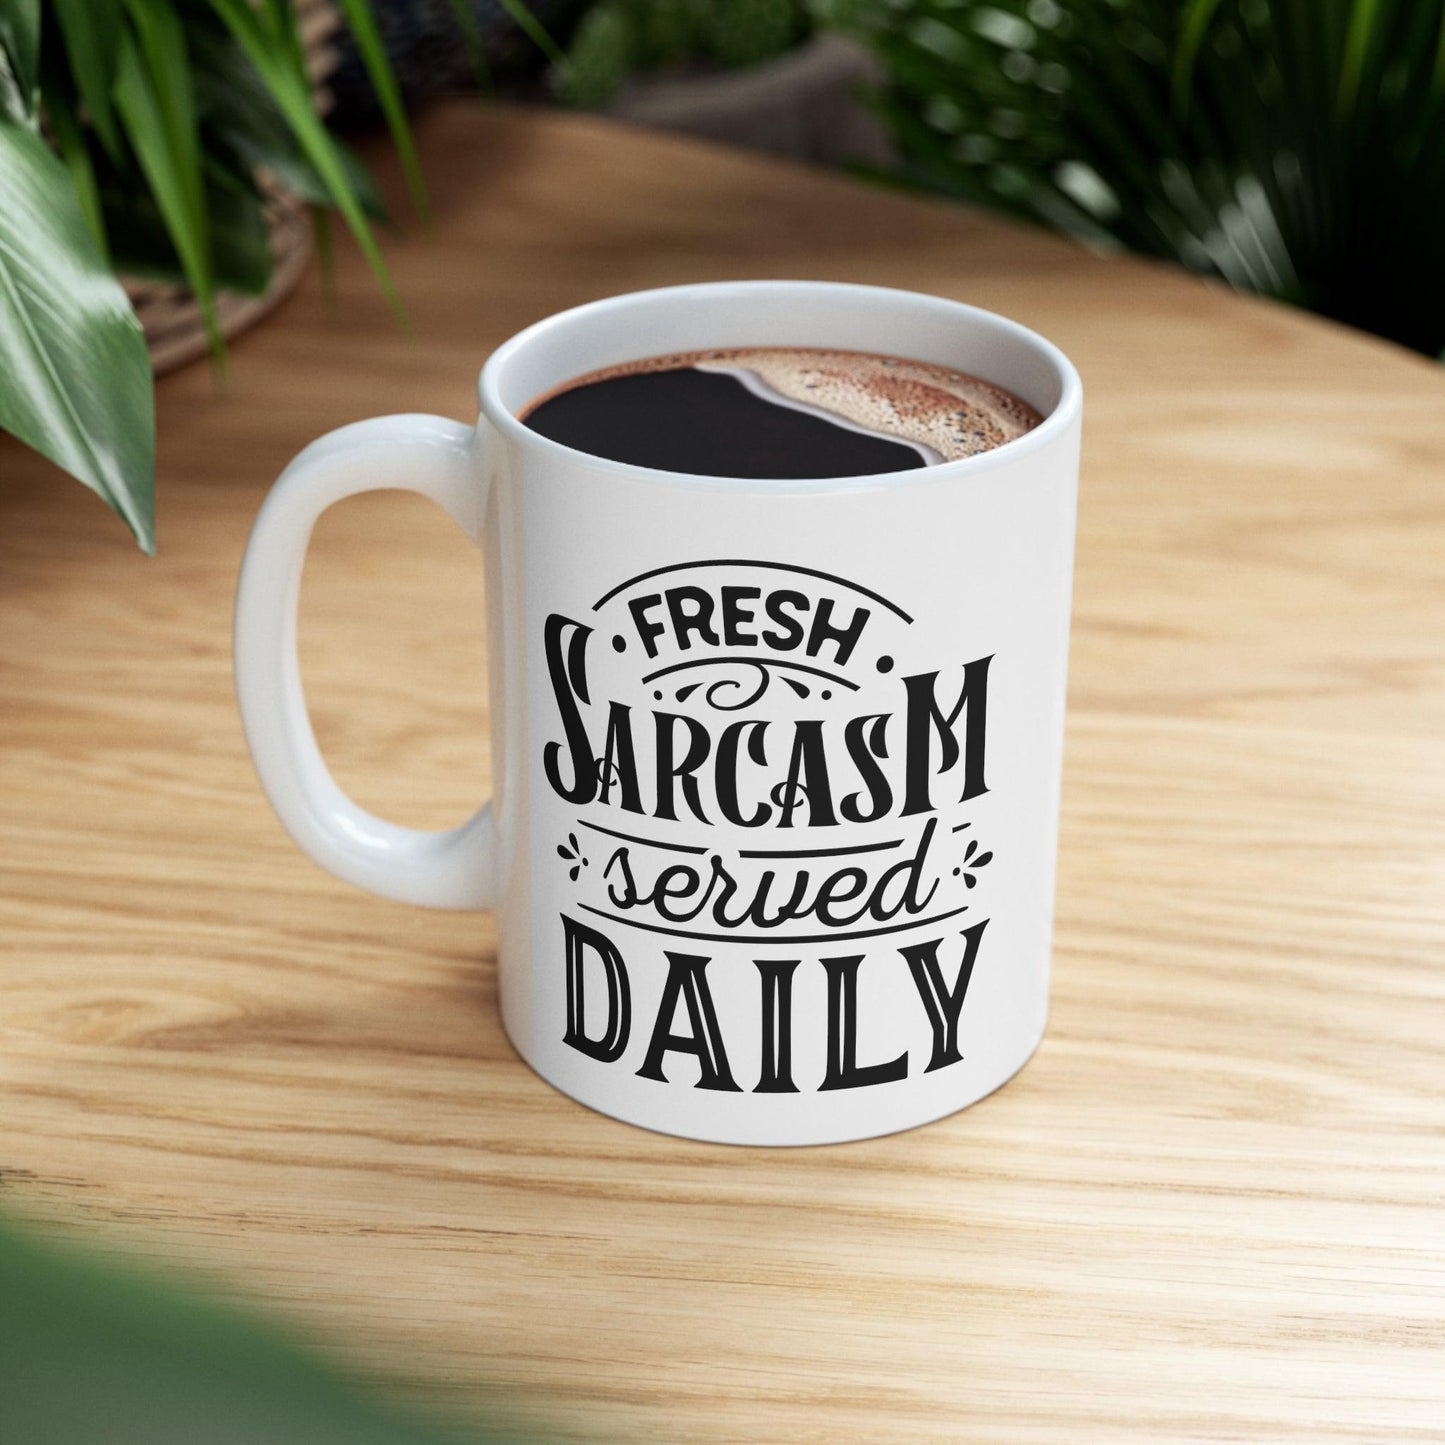 Fresh Sarcasm Served Daily Ceramic Mug 11oz